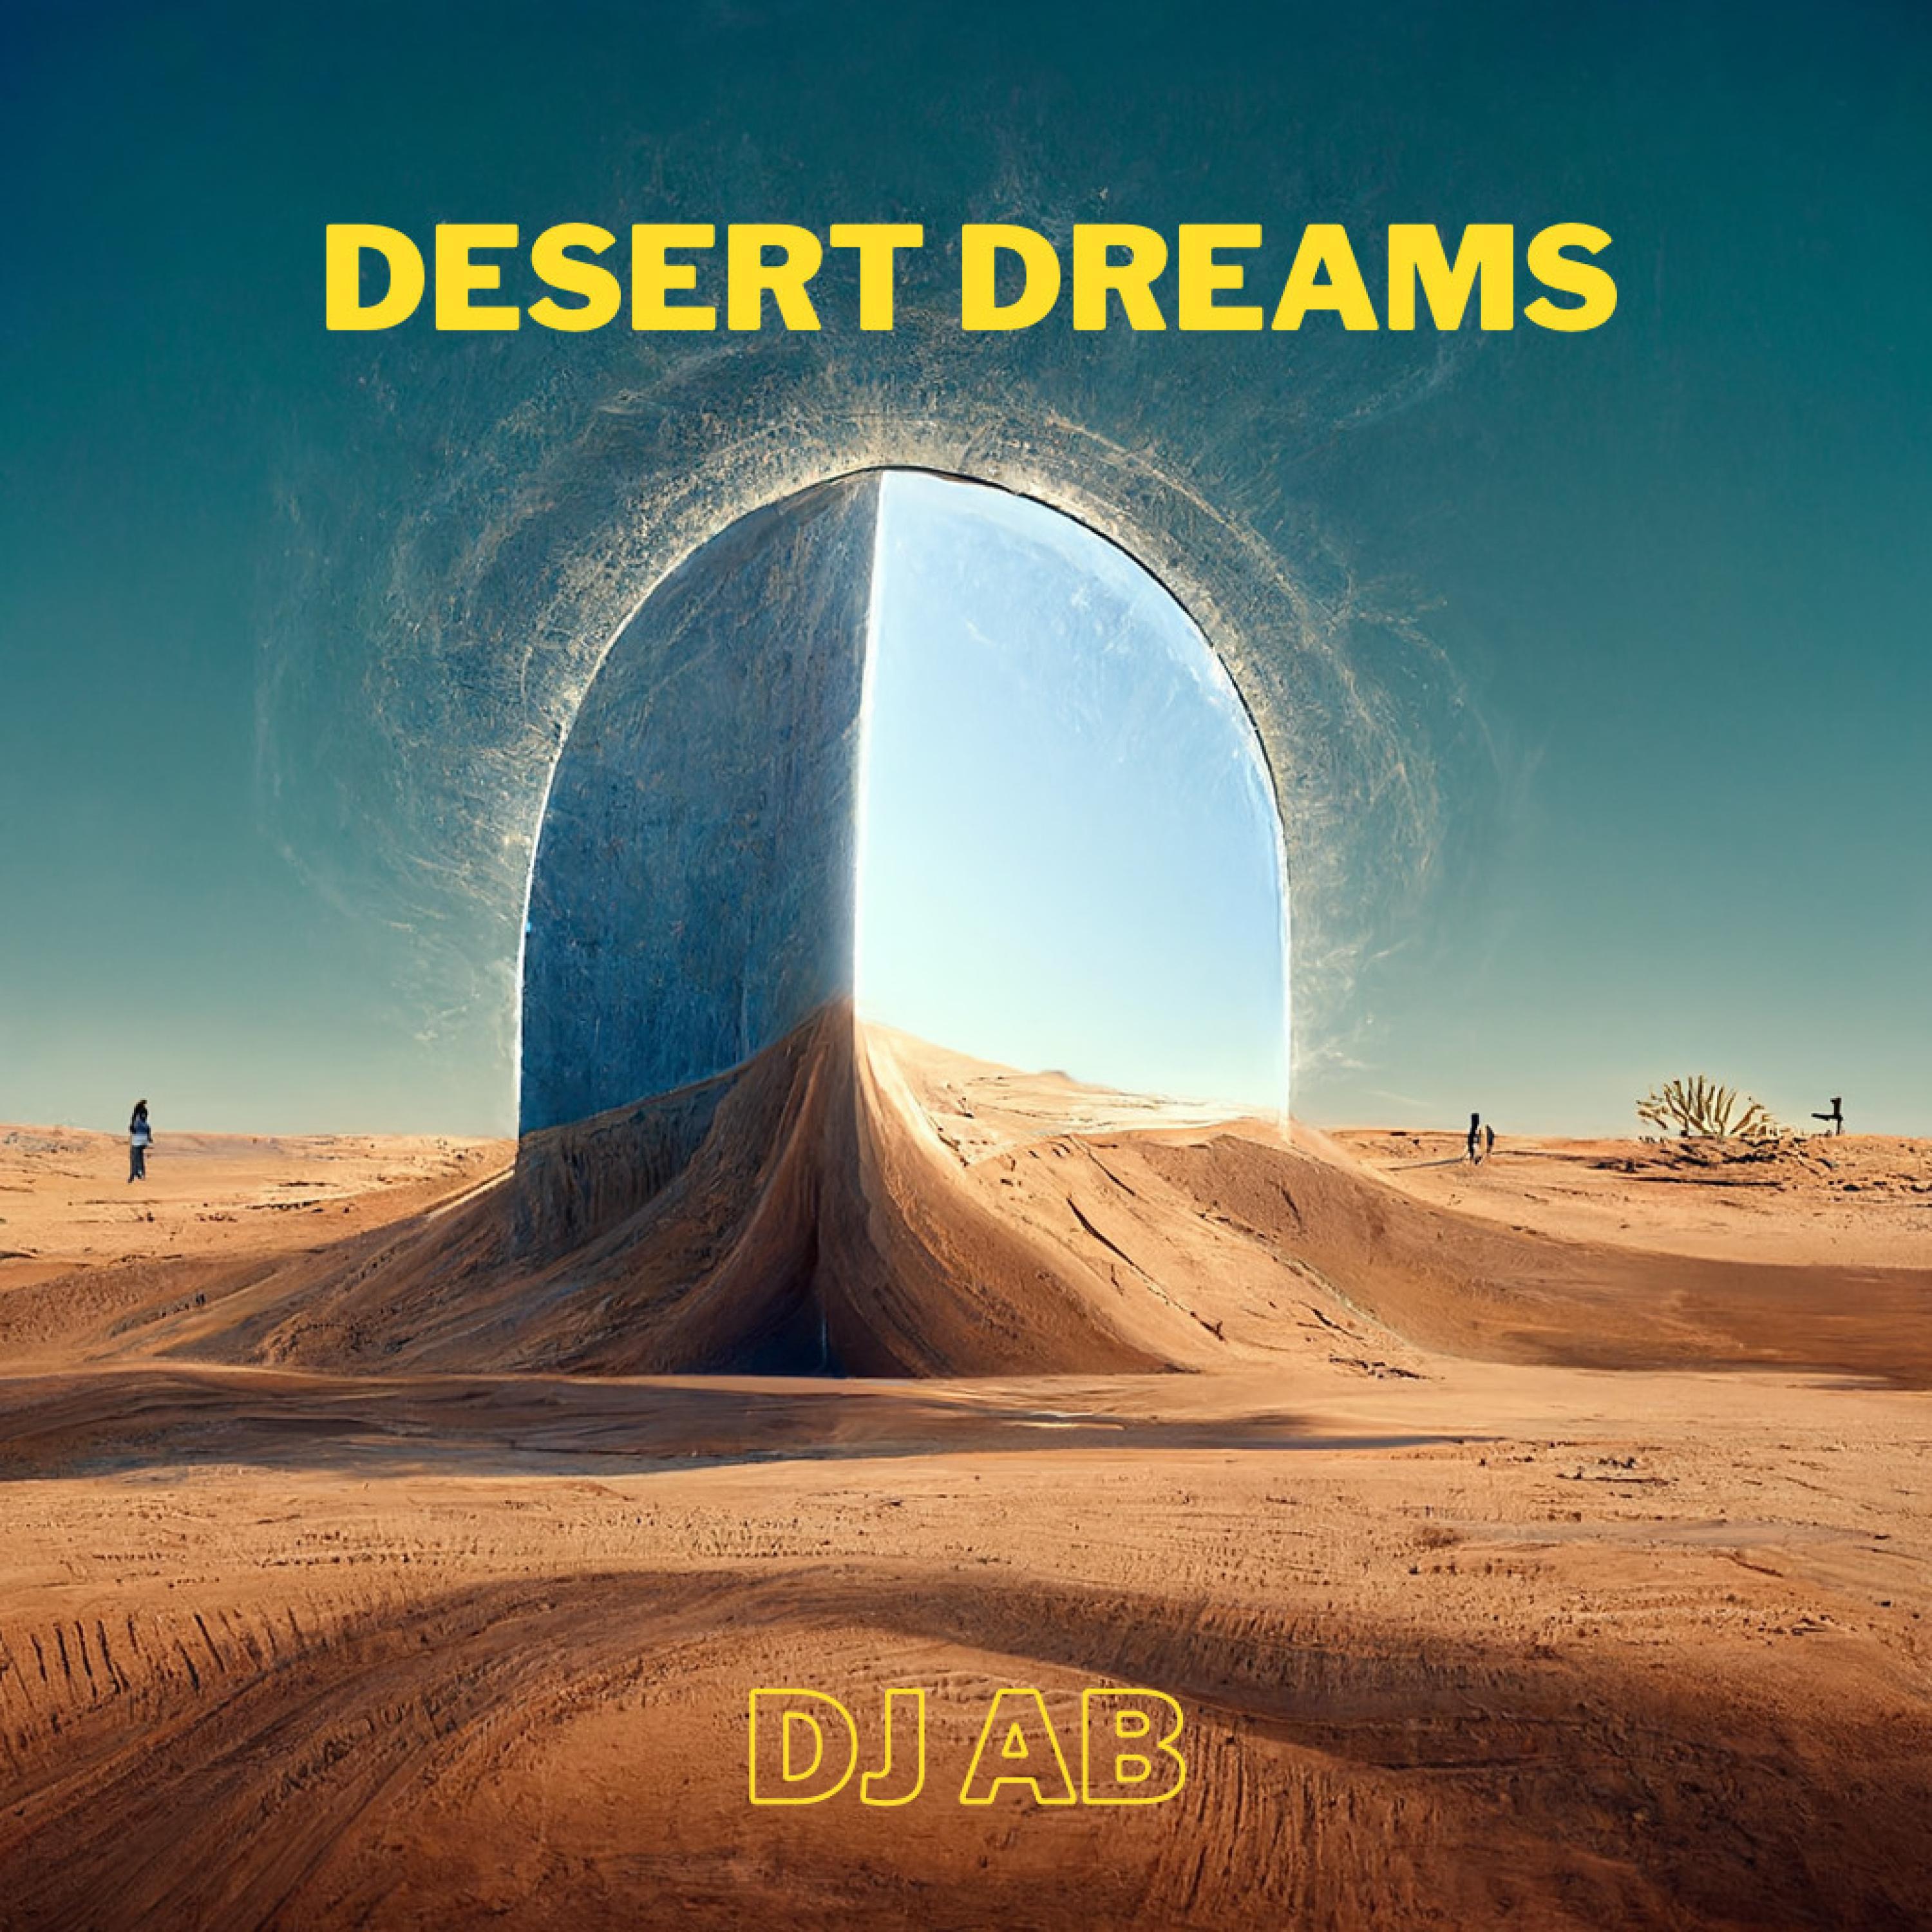 DJ AB - DESERT DREAMS